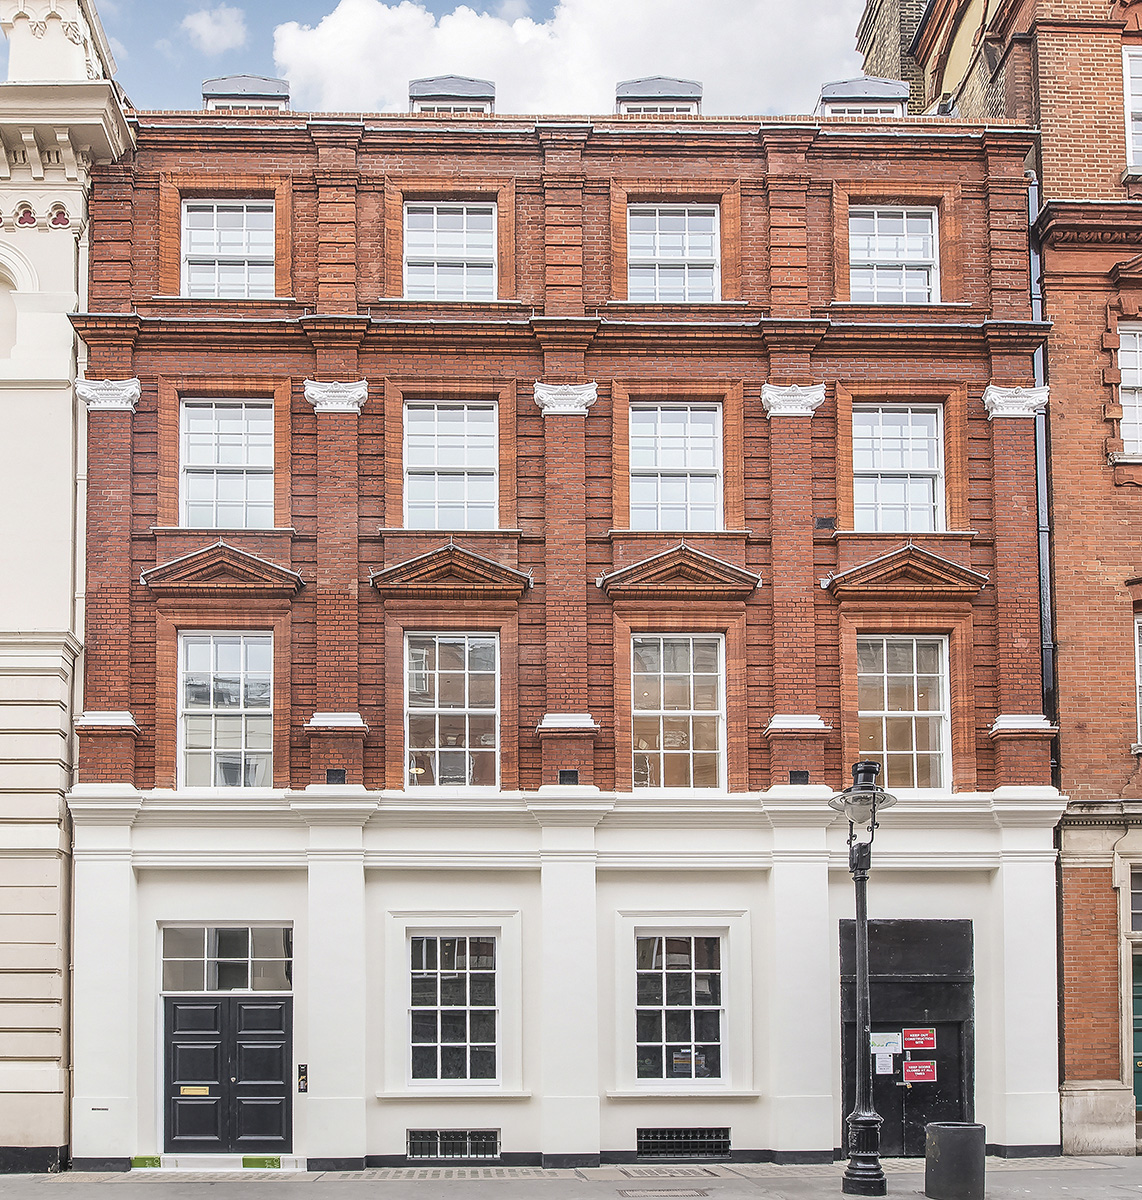 Henrietta Street, Covent Garden granted Planning Permission